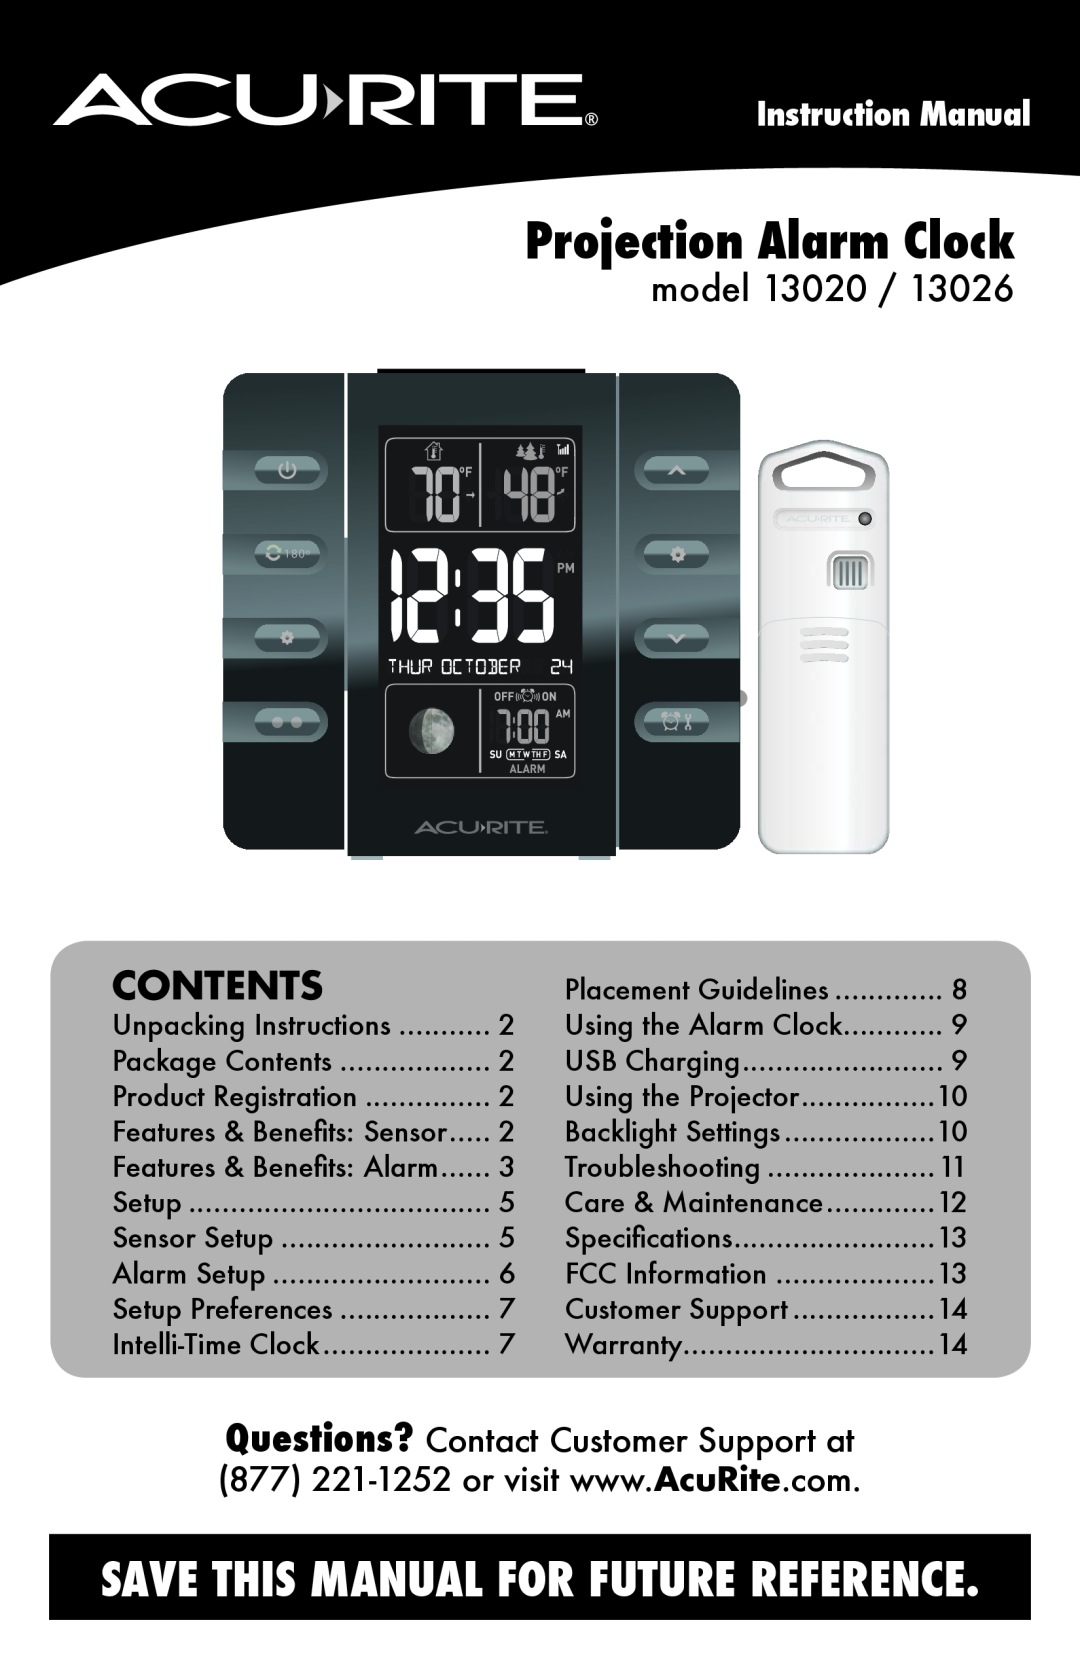 Acu-Rite 13026 instruction manual Contents, model 13020, Instruction Manual, Projection Alarm Clock 